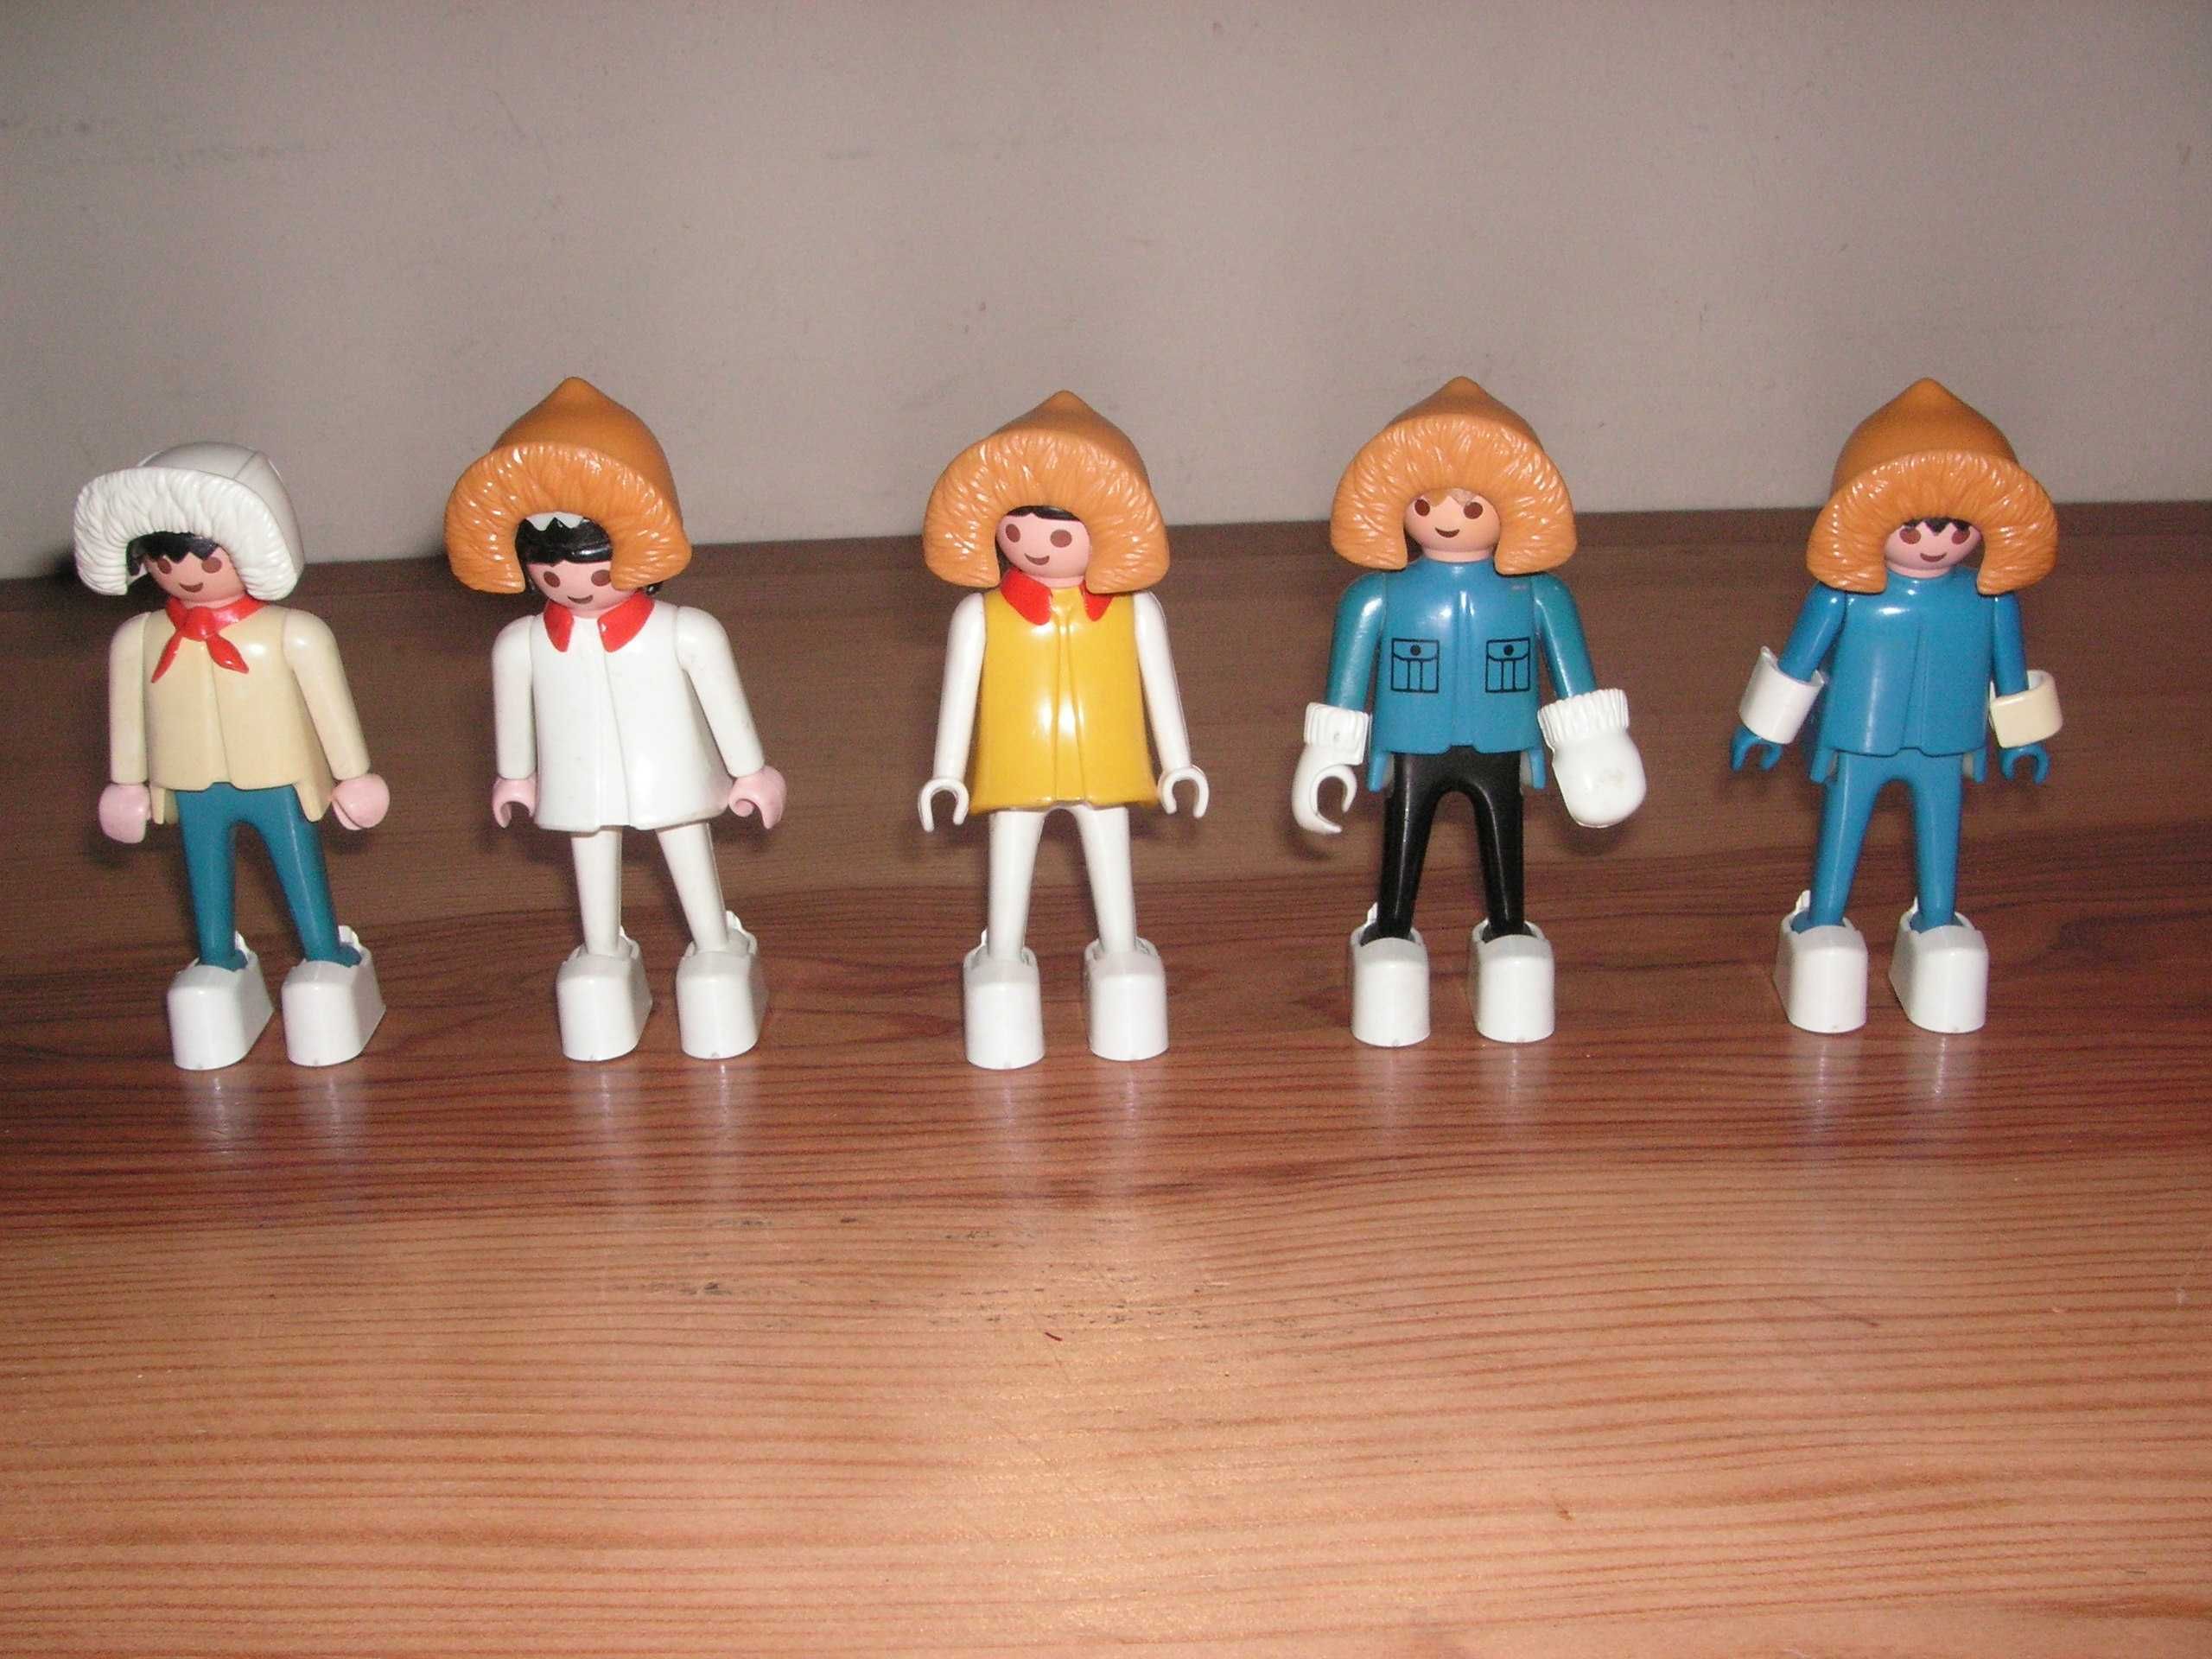 Bonecos / Figuras Playmobil da Neve Geobra 1974